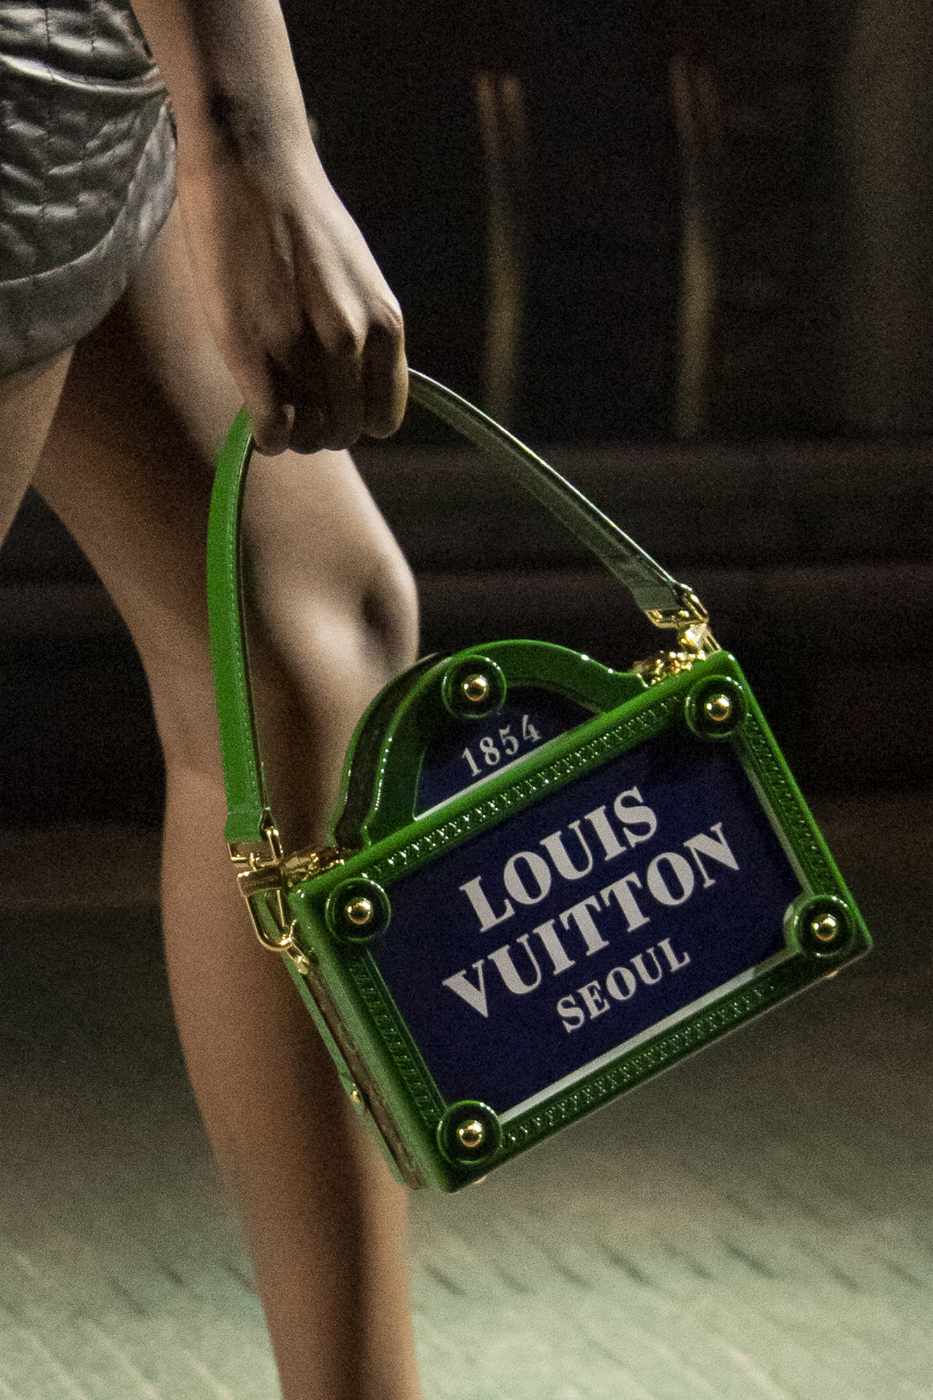 Louis Vuitton Pre-Fall 2023 Seoul Runway Collection